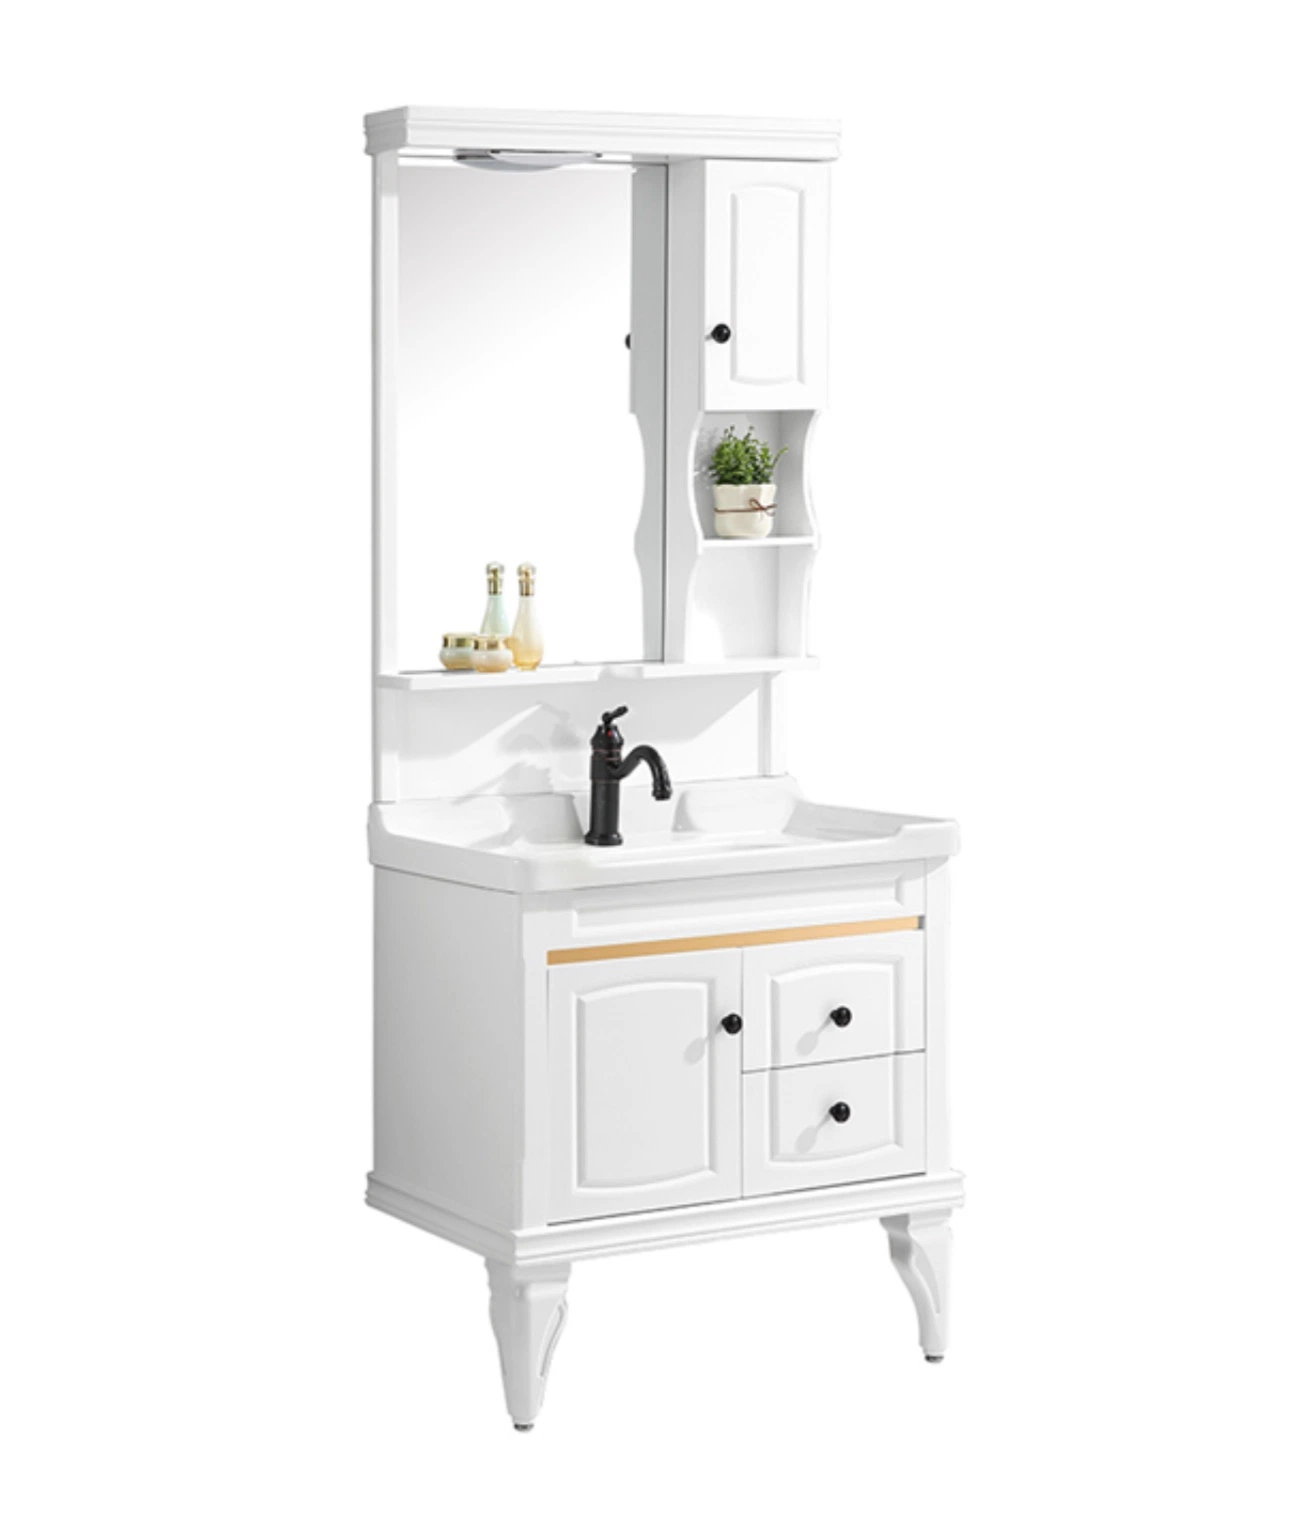 Sino857 Design Bathroom Furniture Bathroom Vanities Big Storage Smart Mirror with Rectangular Single Hole Wash Basin